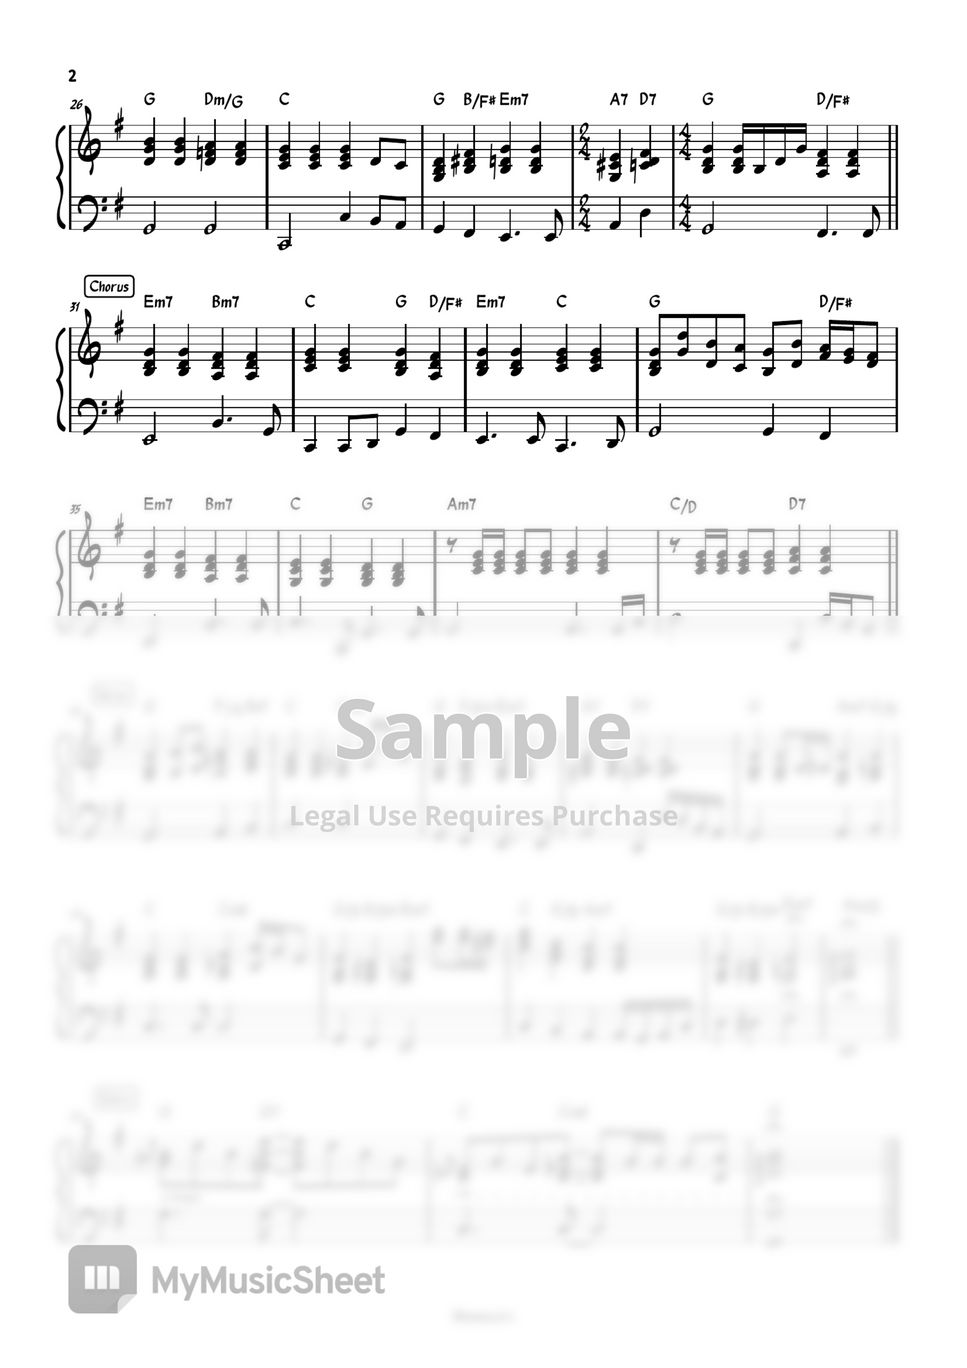 The Eagles - Desperado (Piano accomp.) by Meowscore